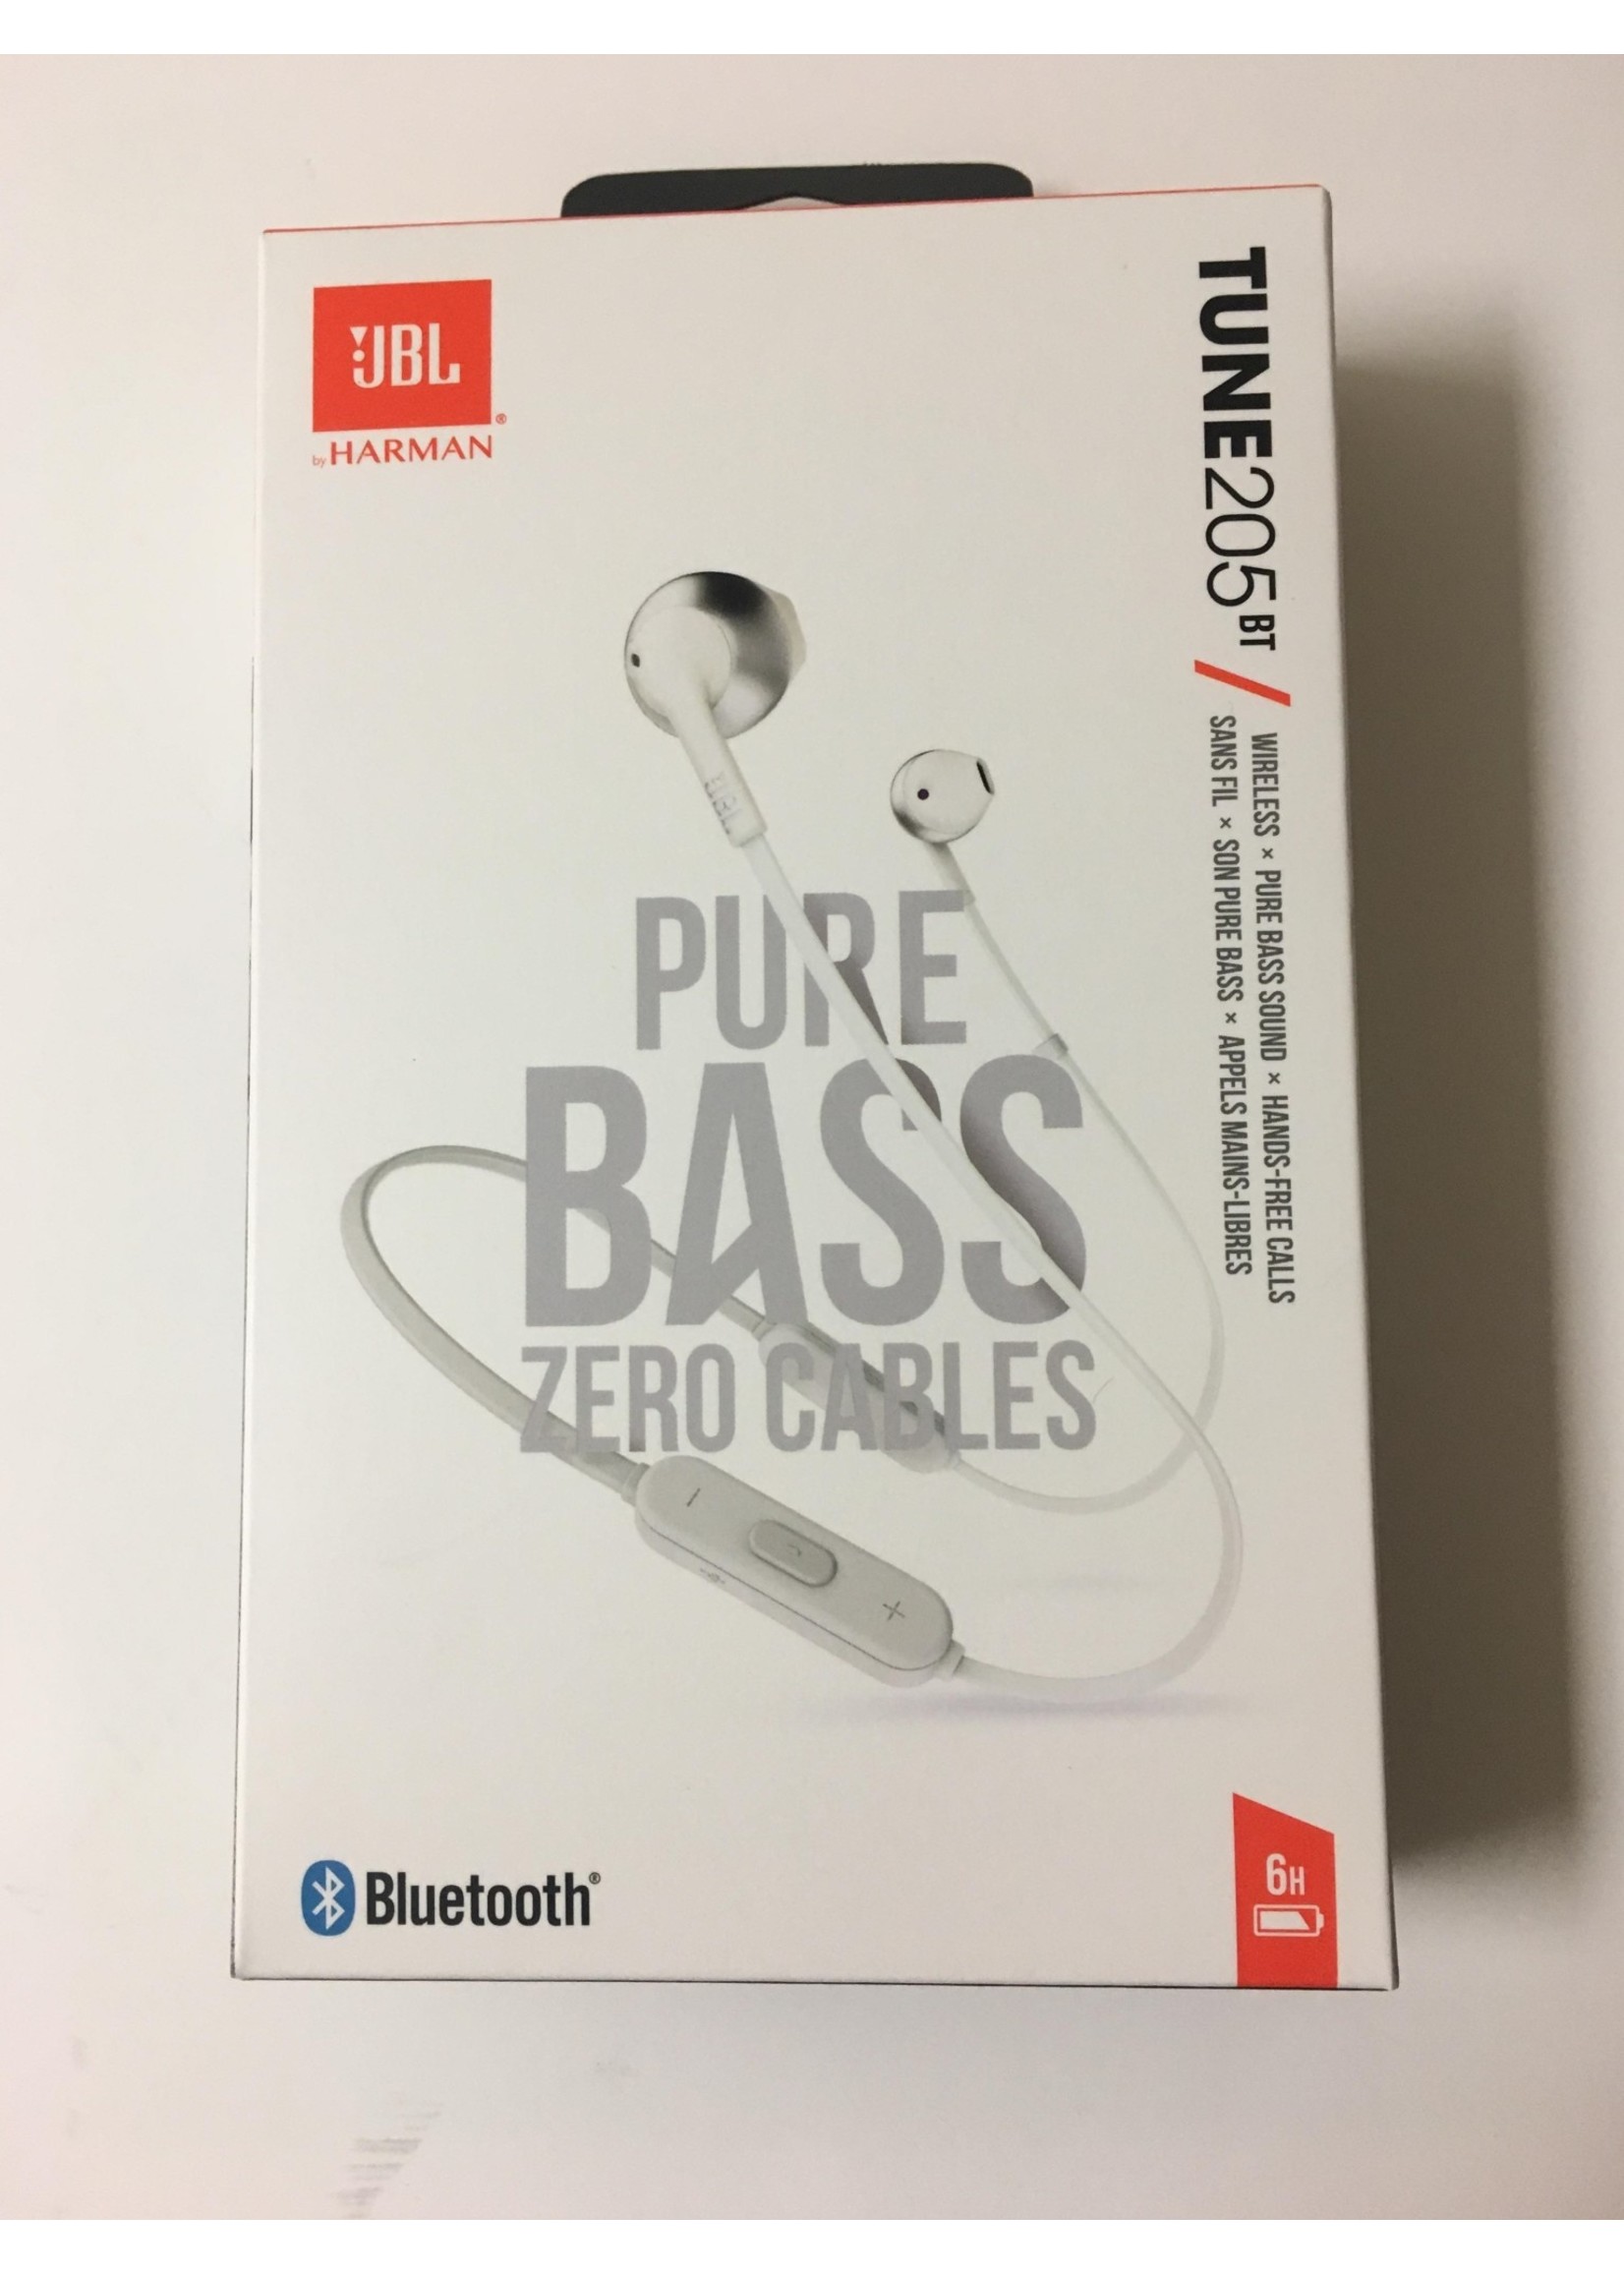 Pure bass zero. 1396851001 JBL Tune 205bt. Как сбросить наушники до заводских Pure Bass Zero Cables.